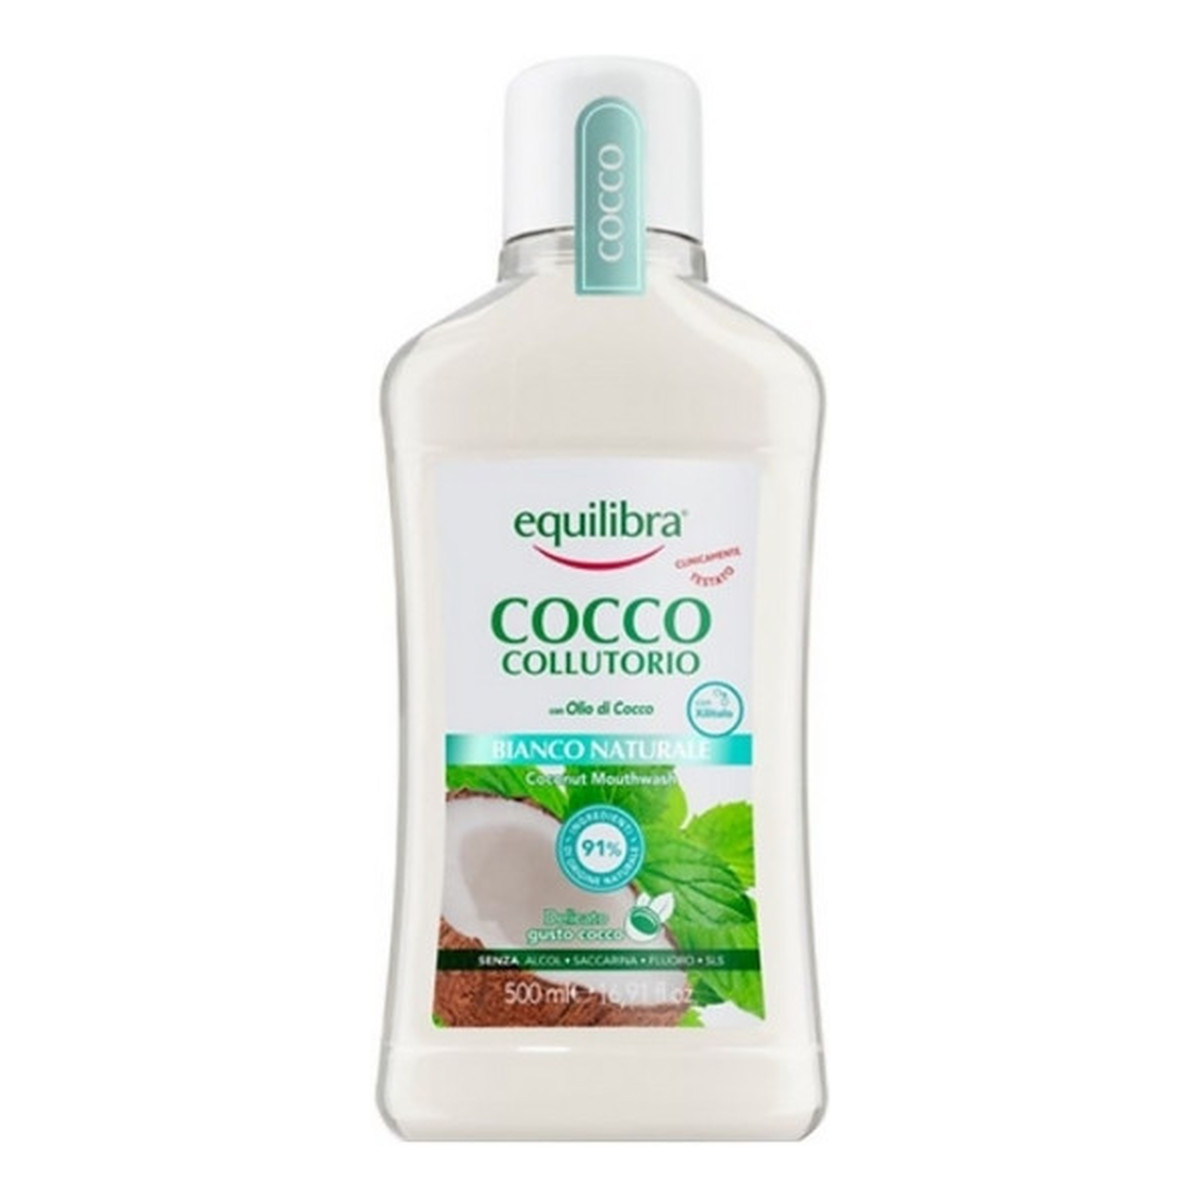 Equilibra Cocco collutorio mouthwash płyn do płukania jamy ustnej kokos 500ml